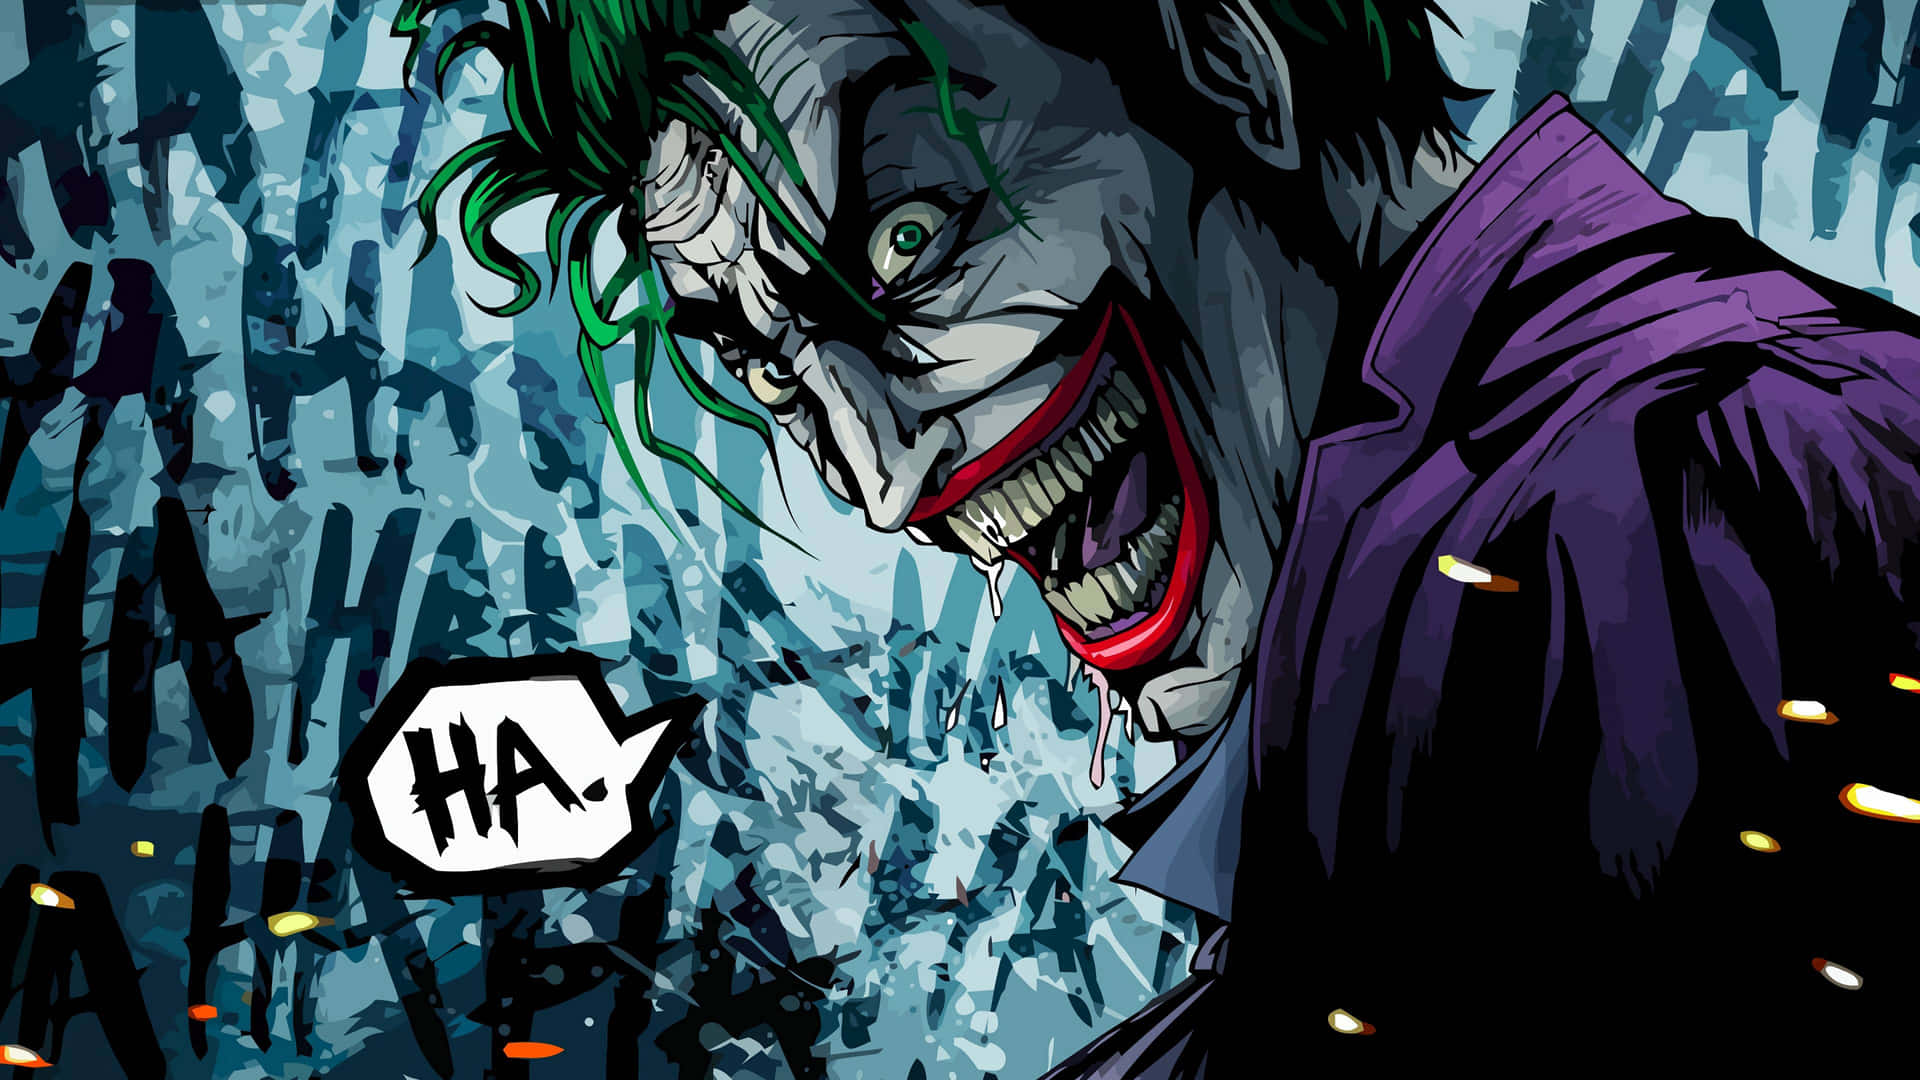 Maniacal Joker Laugh in an Intense Atmosphere Wallpaper